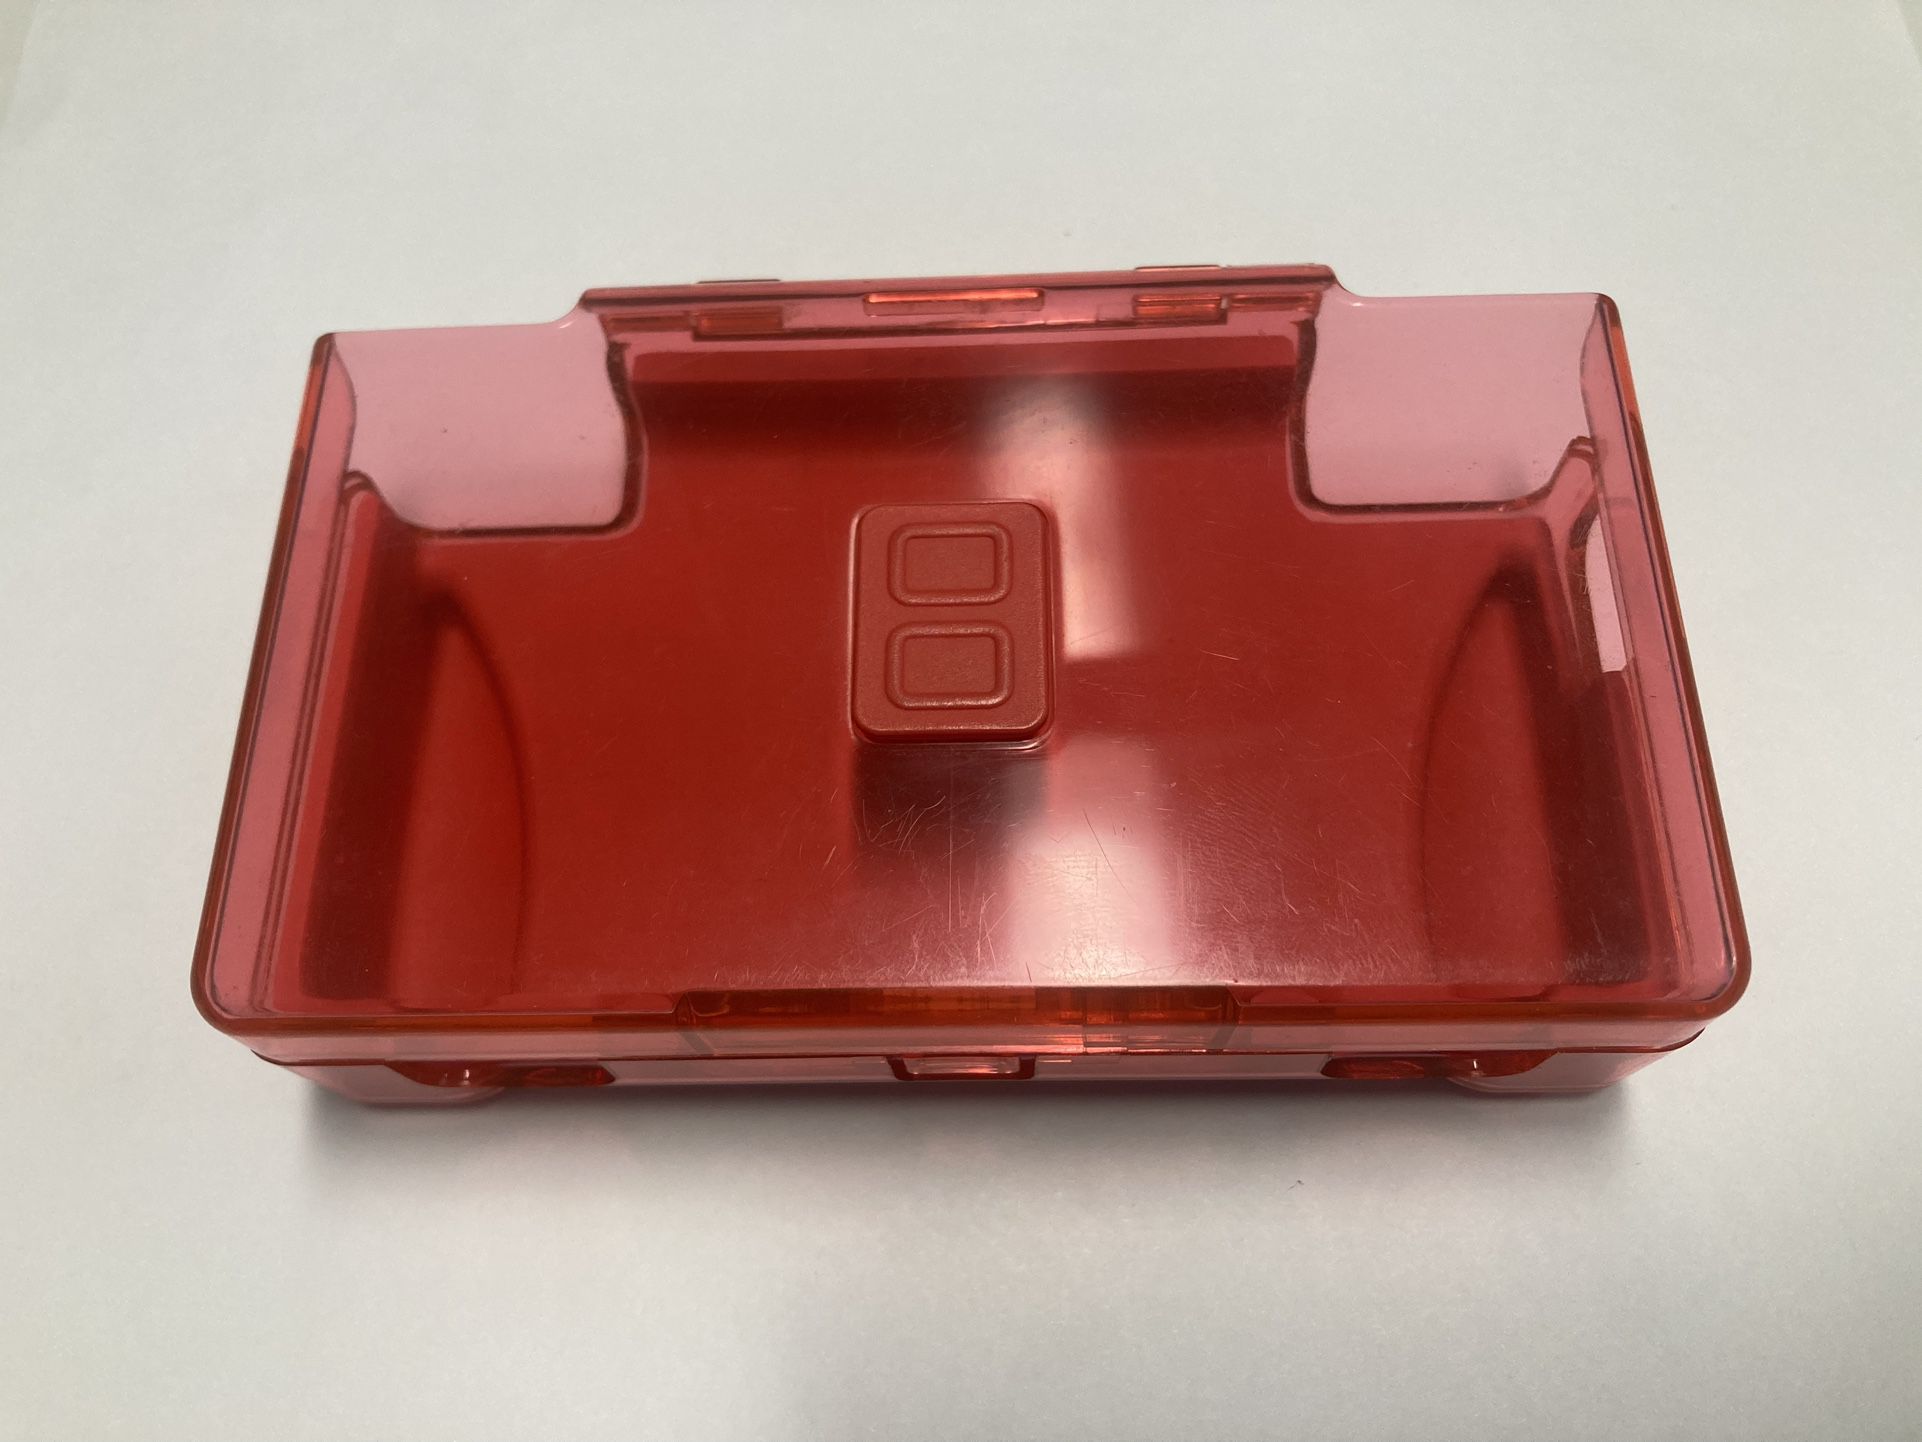 DS Lite Case / Grip - Translucent Red